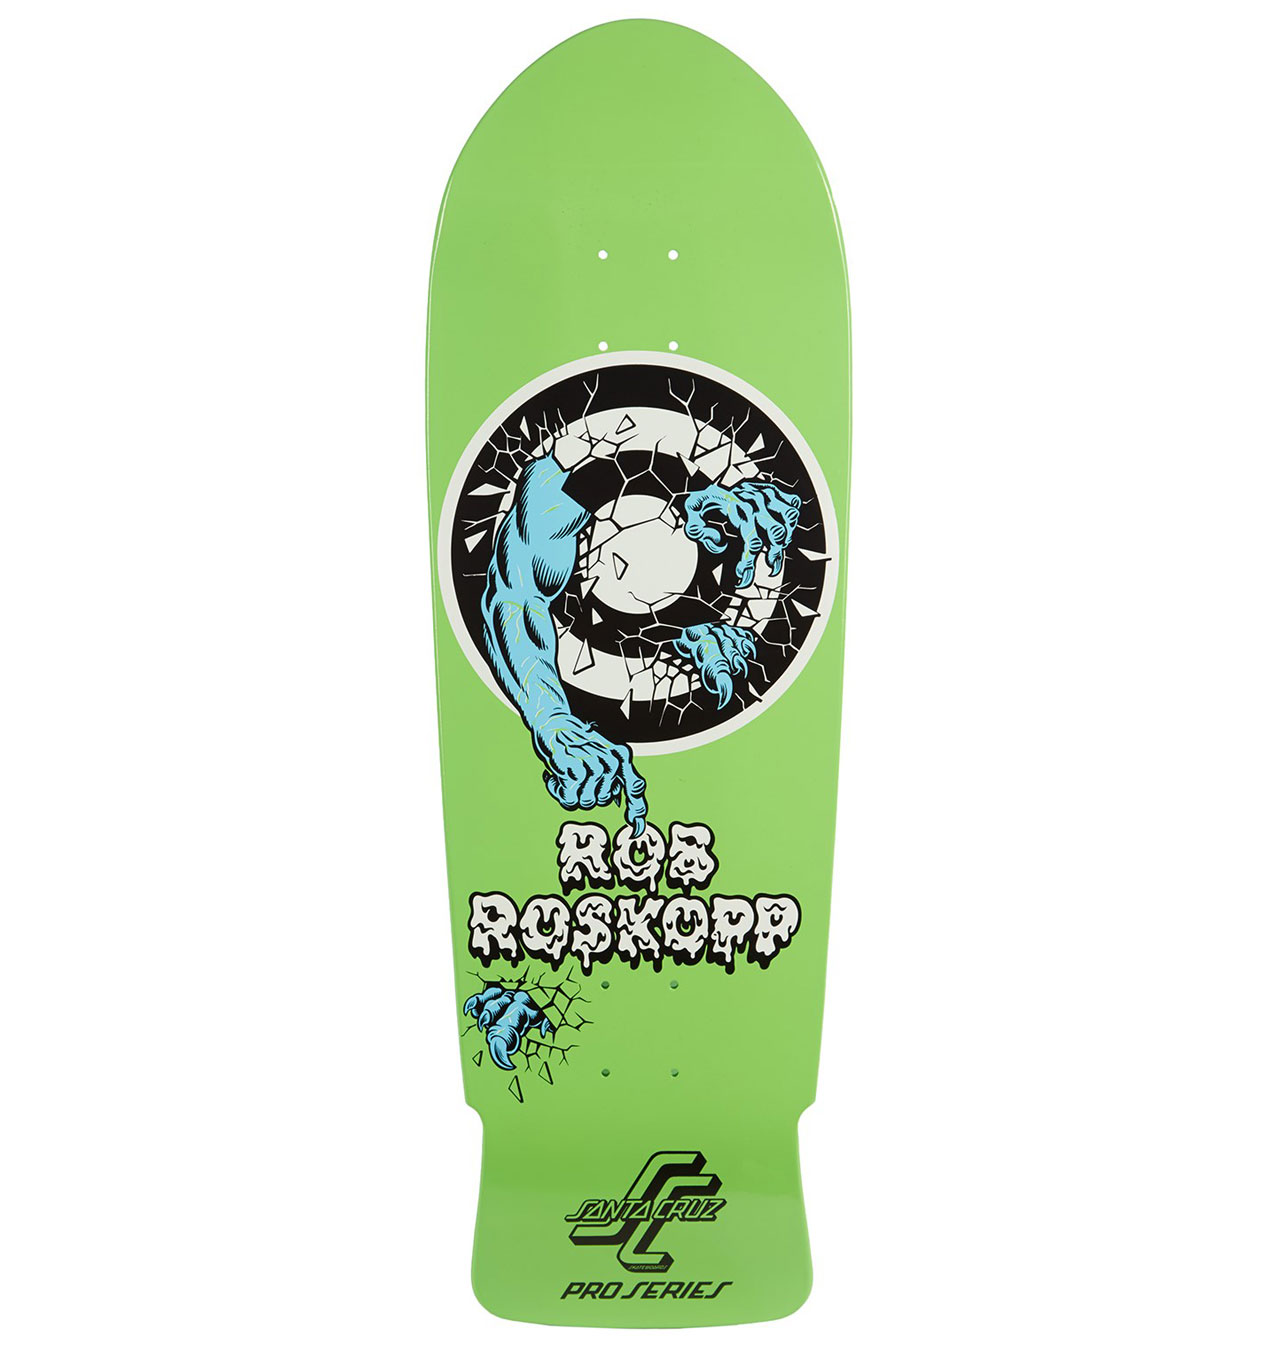 santa-cruz-rob-target-2-green-fluorescent-reissue-skateboard-deck-10